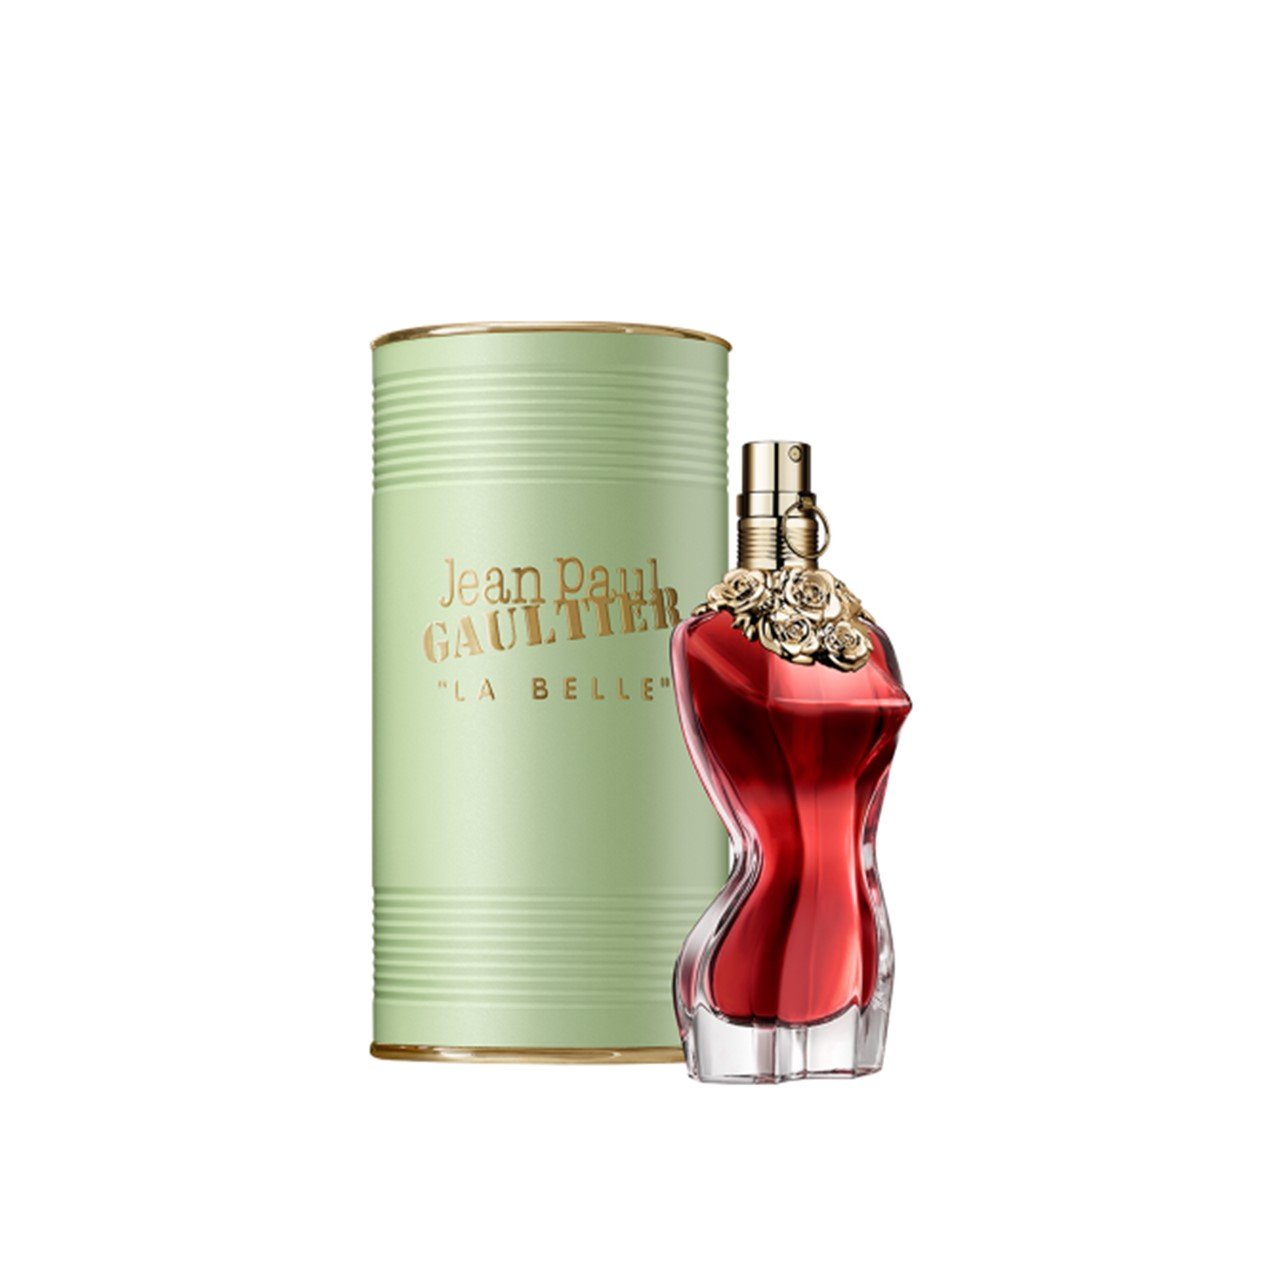 Belle Paul La Gaultier Eau oz) (1.7fl USA Jean 50ml Buy de Parfum ·